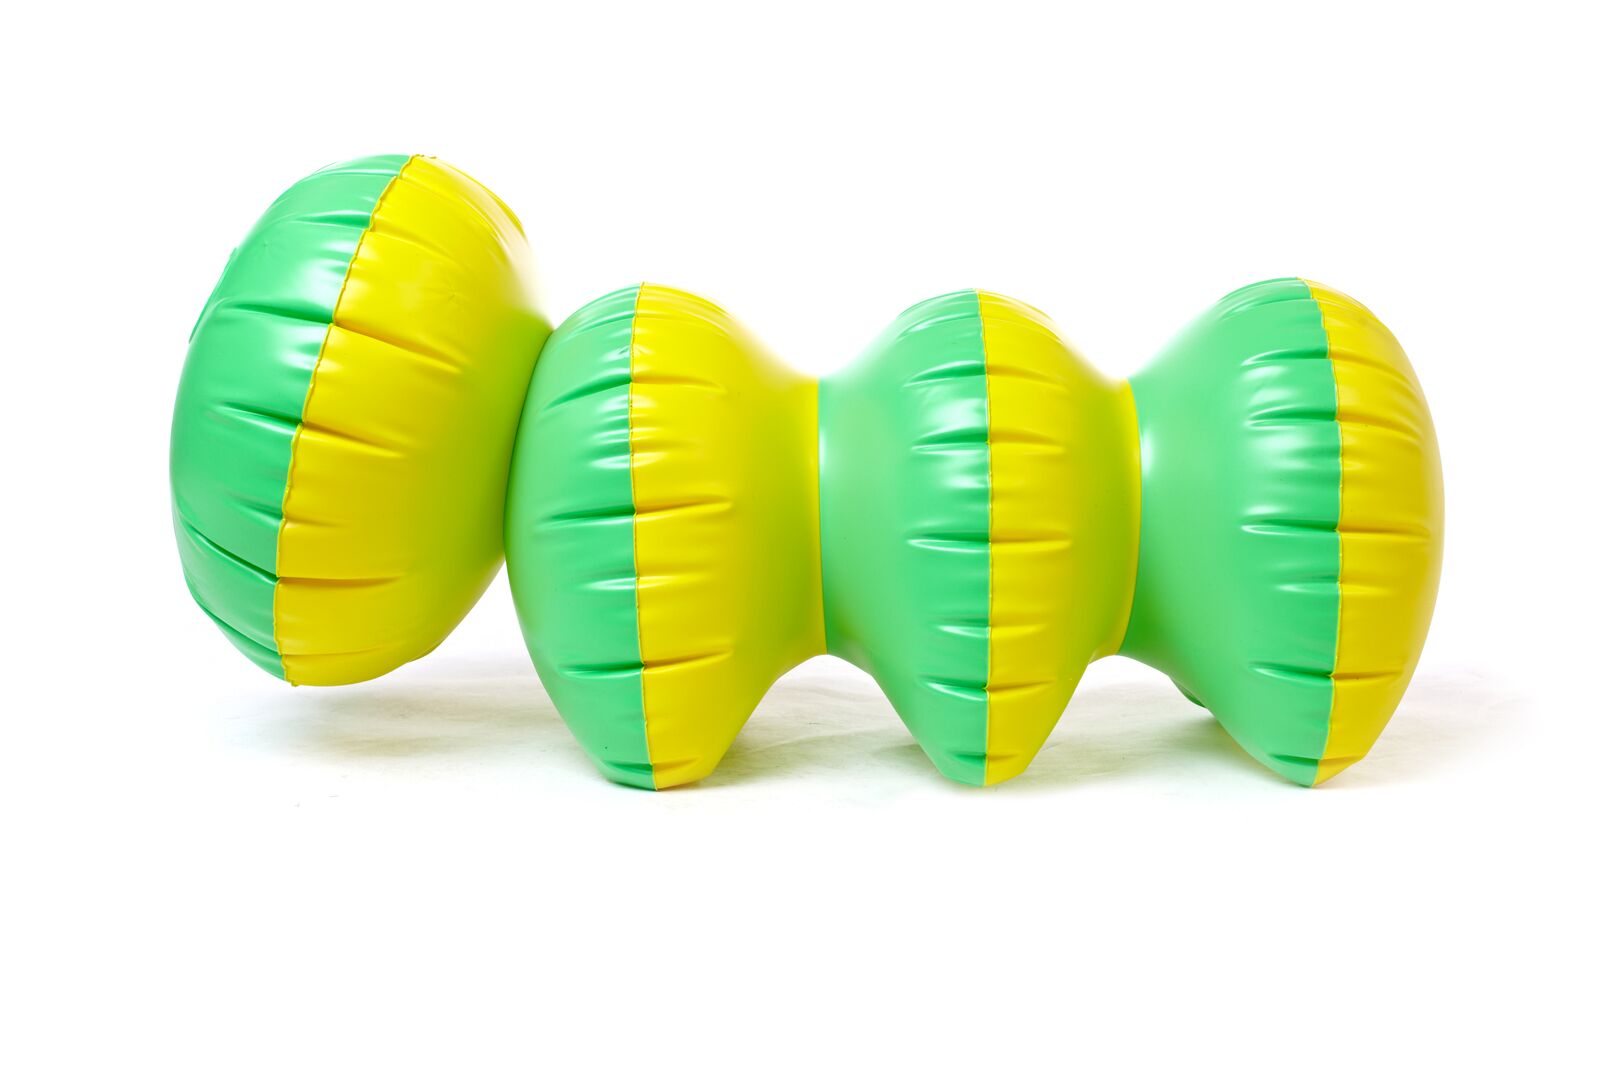 Caterpillar-jouet gonflable-Fatra-Libuše-Niklová-slavia vintage 2